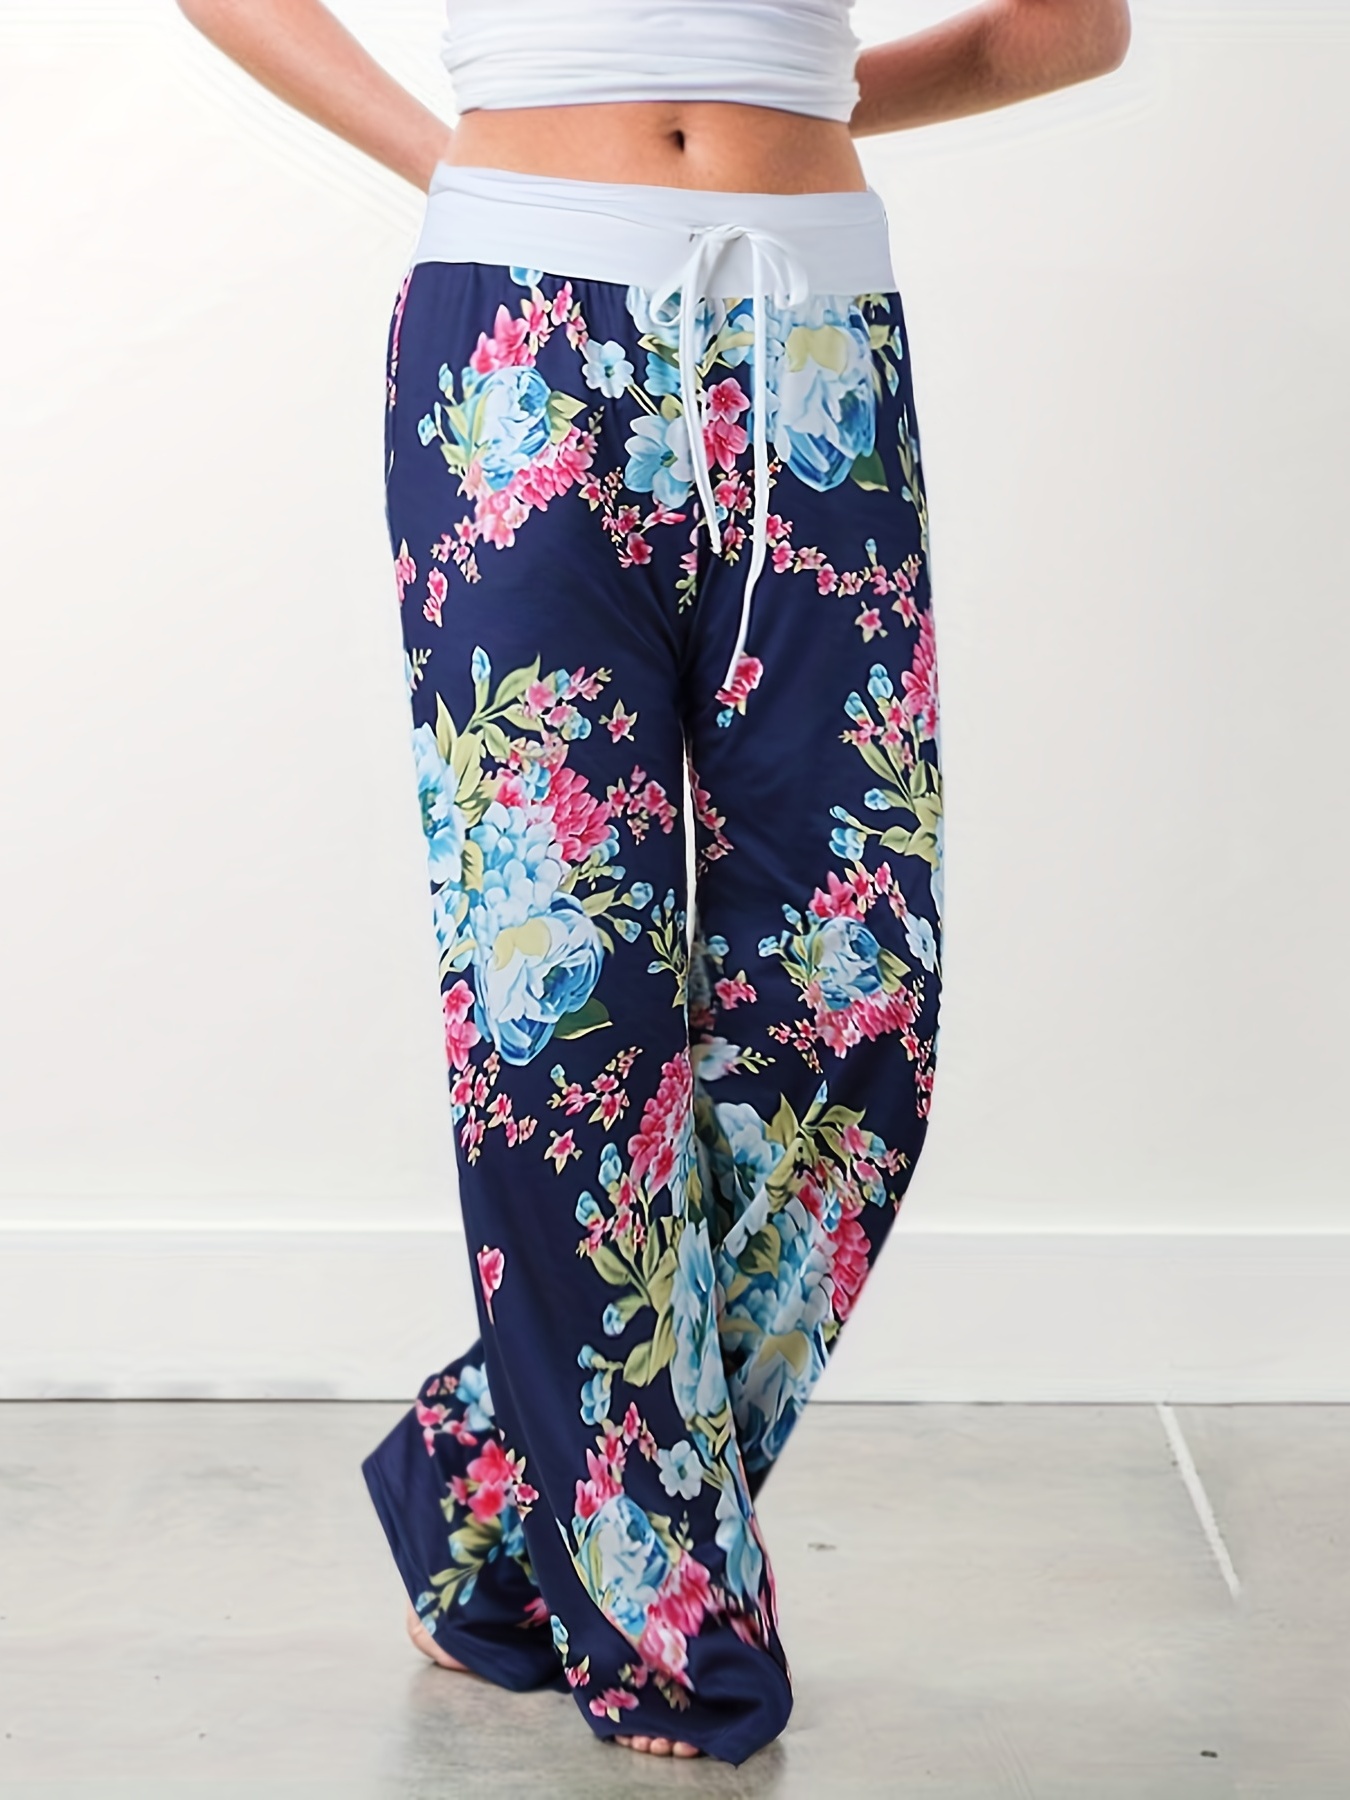 Women's Pant Women's Comfy Pajama Pants Floral Print Drawstring